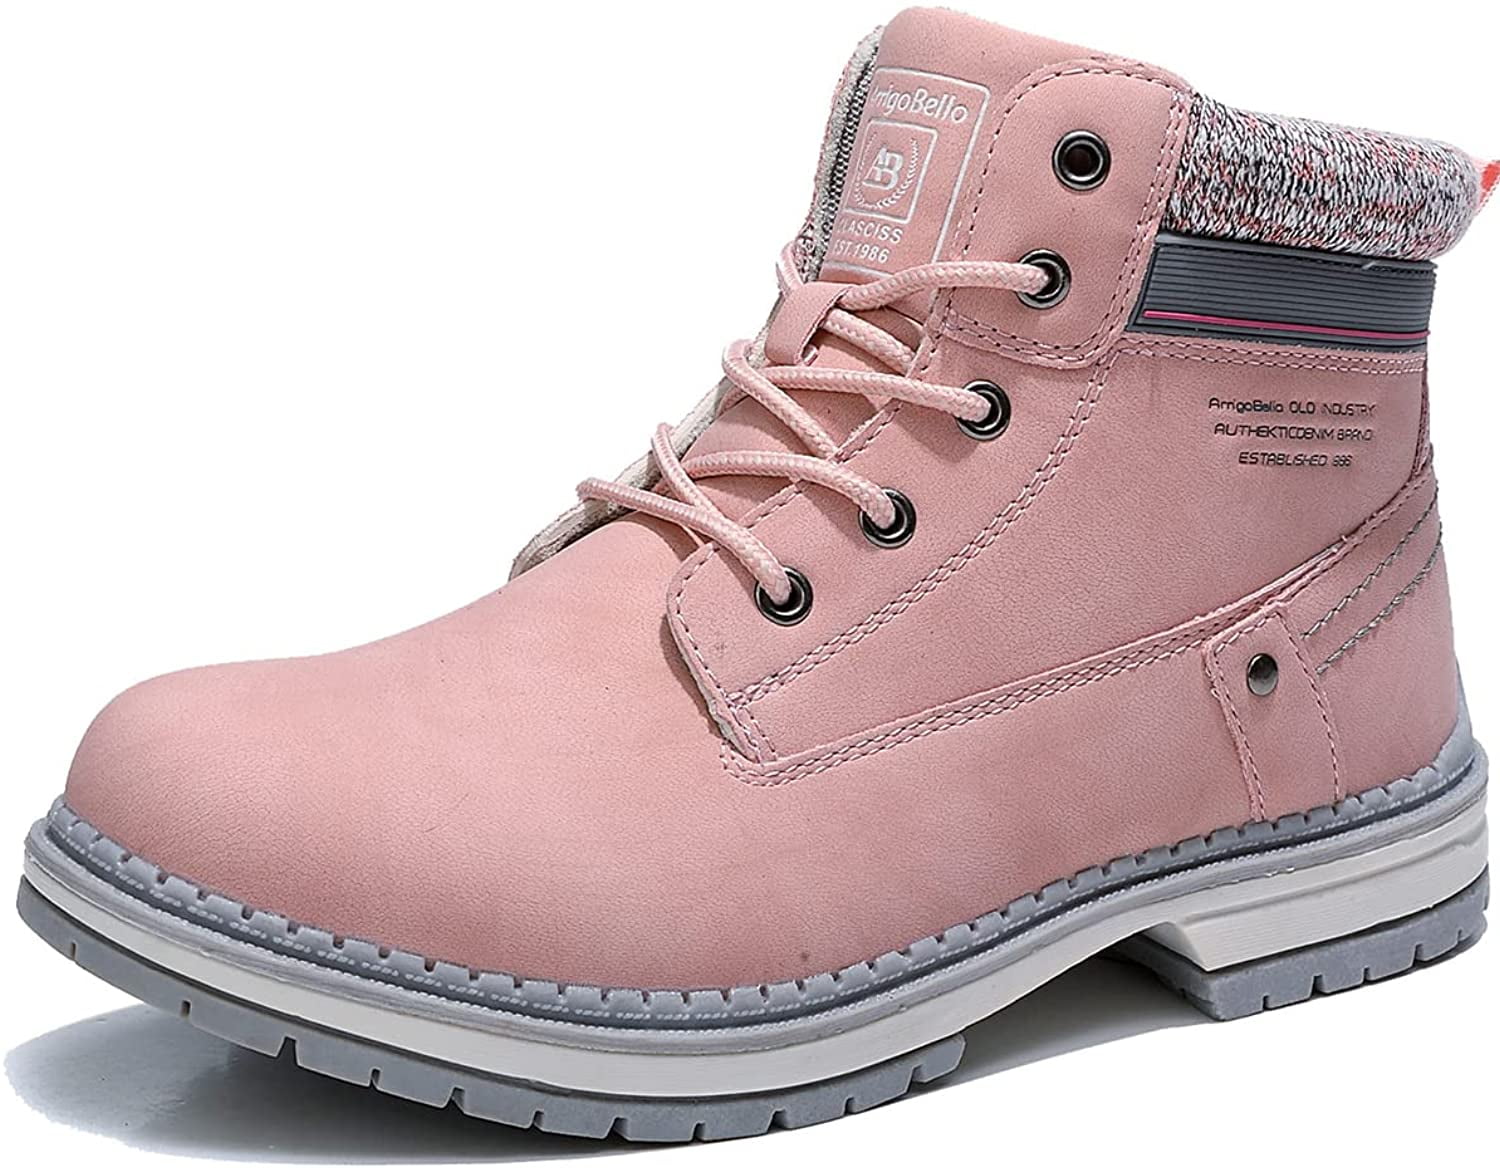 Arrigo Bello Women's Cute Four Seasons Outdoor Hiking Boots Pink -  